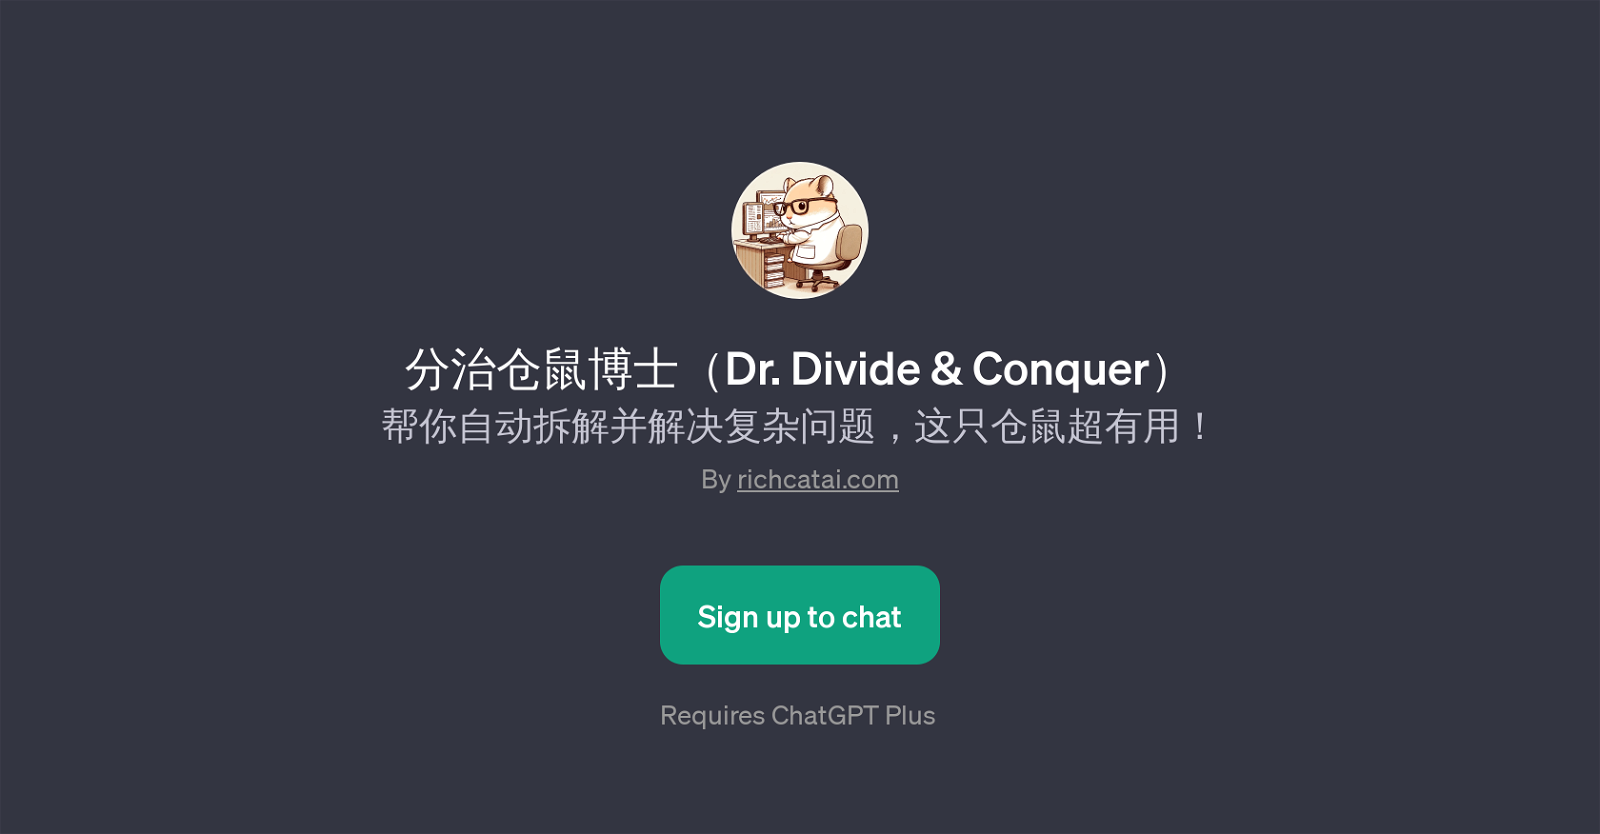 Dr. Divide & Conquer website